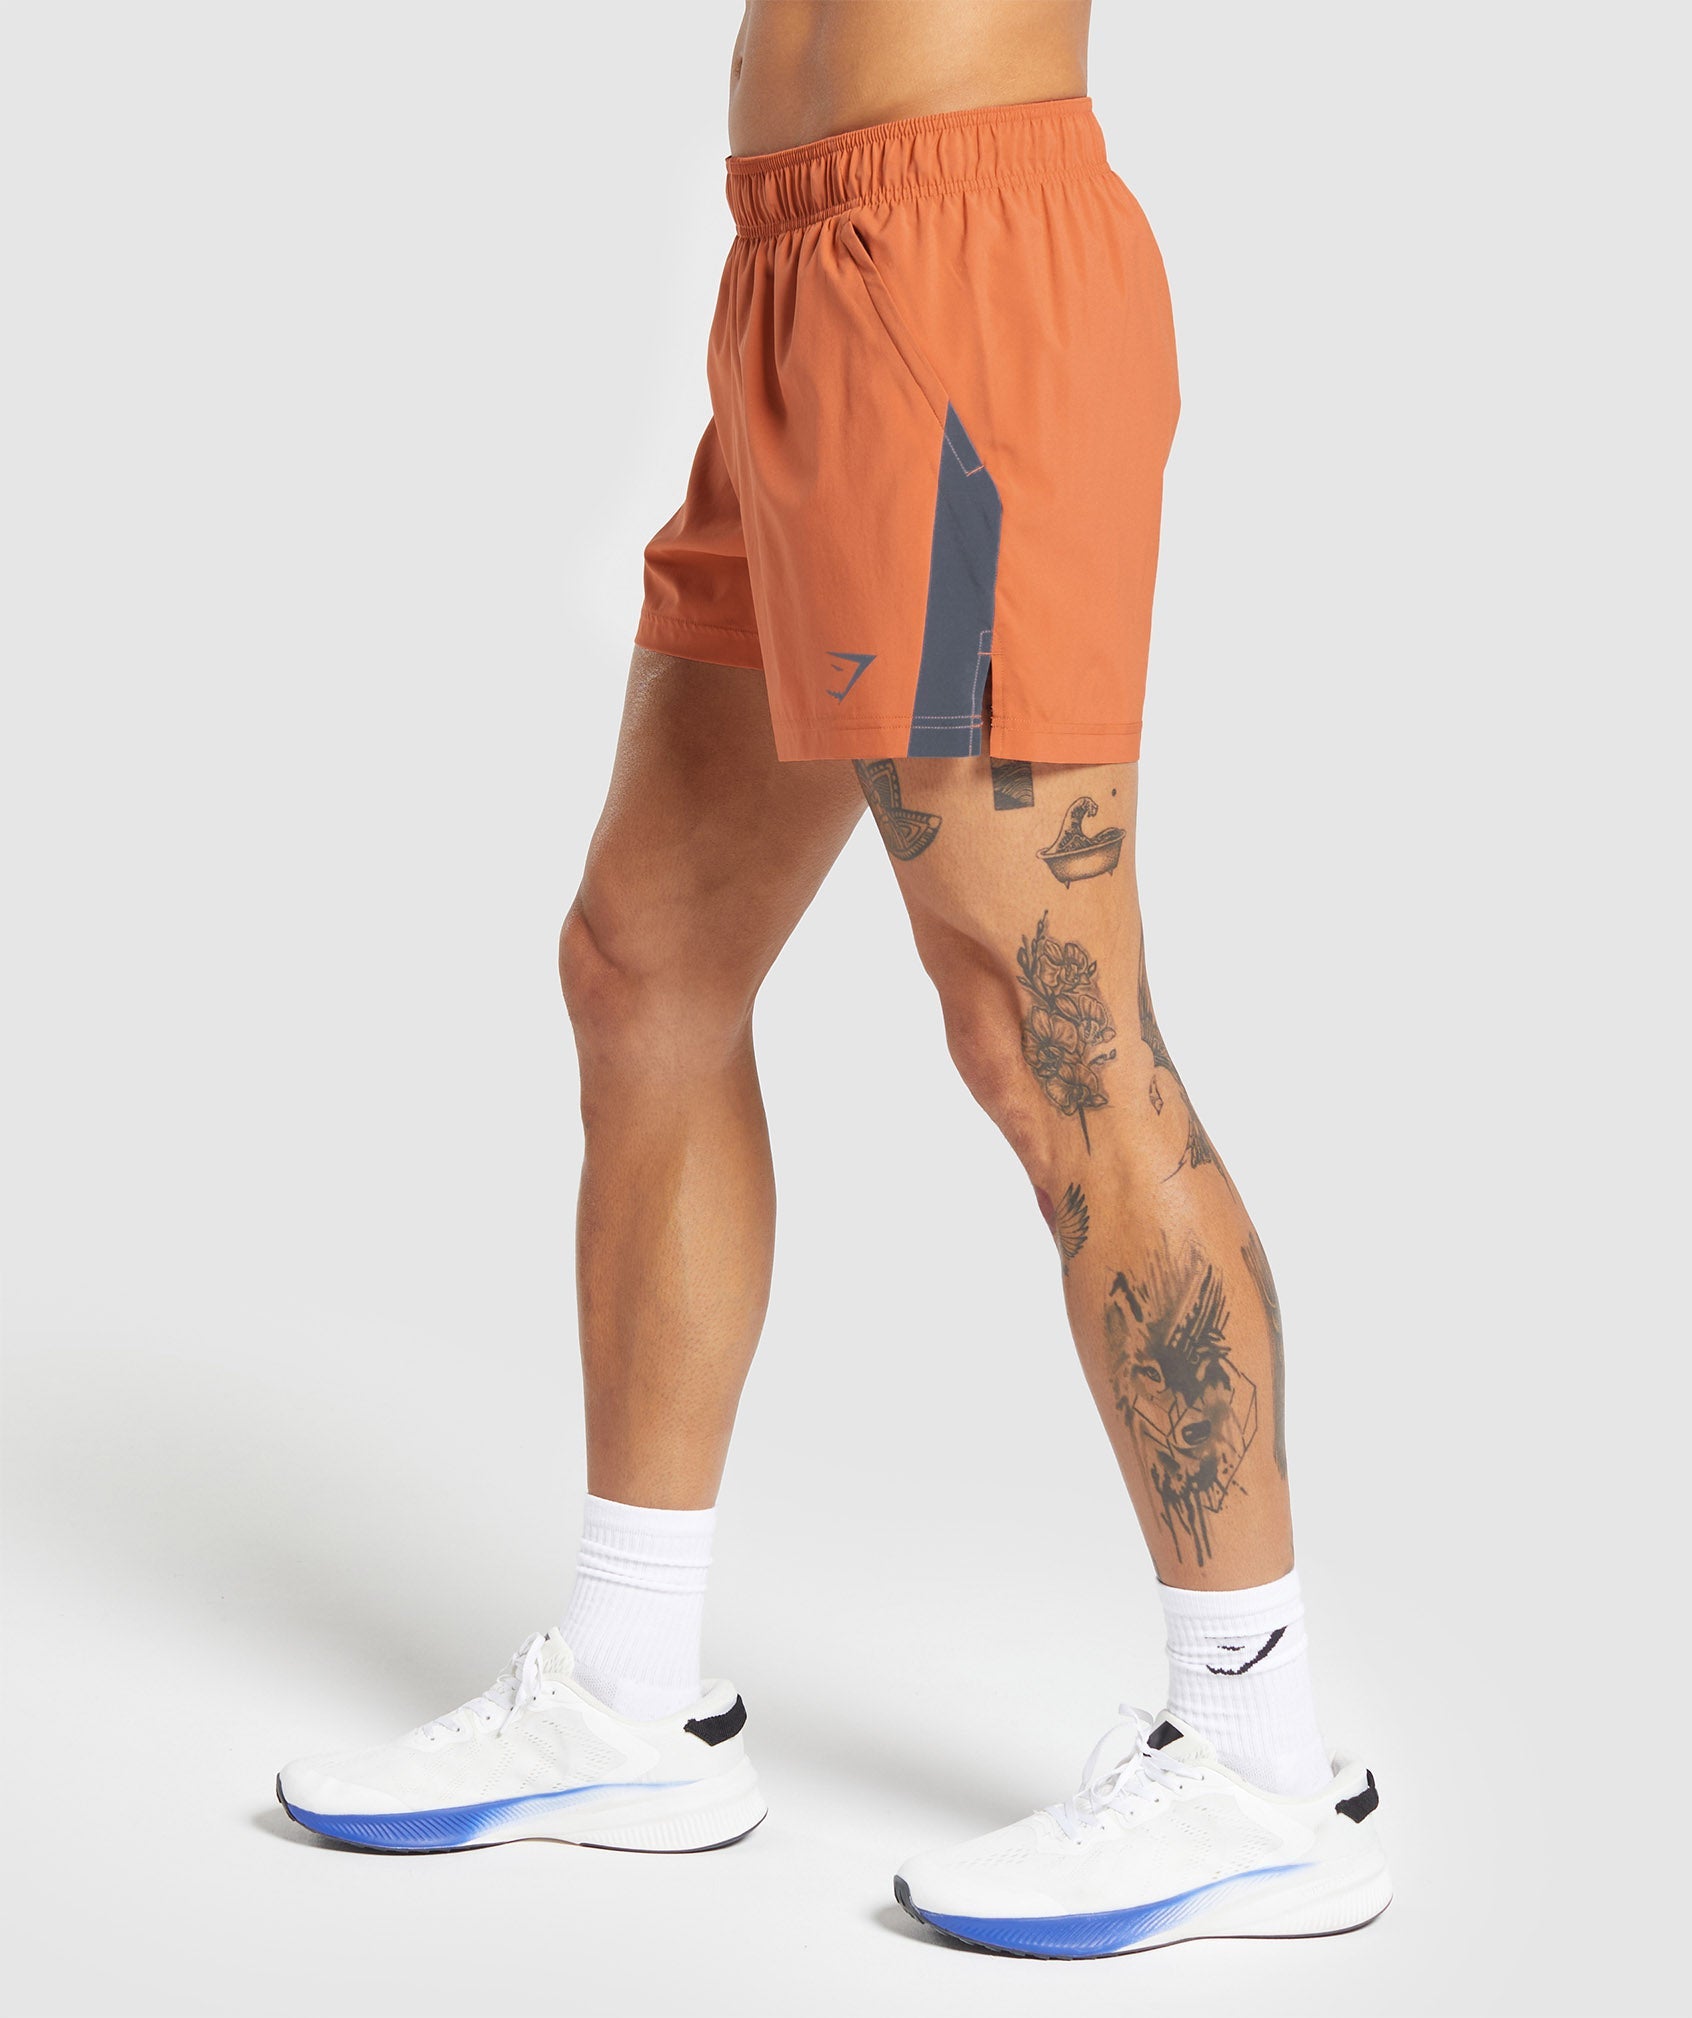 Sport 5" Shorts in Muted Orange/Titanium Blue - view 3